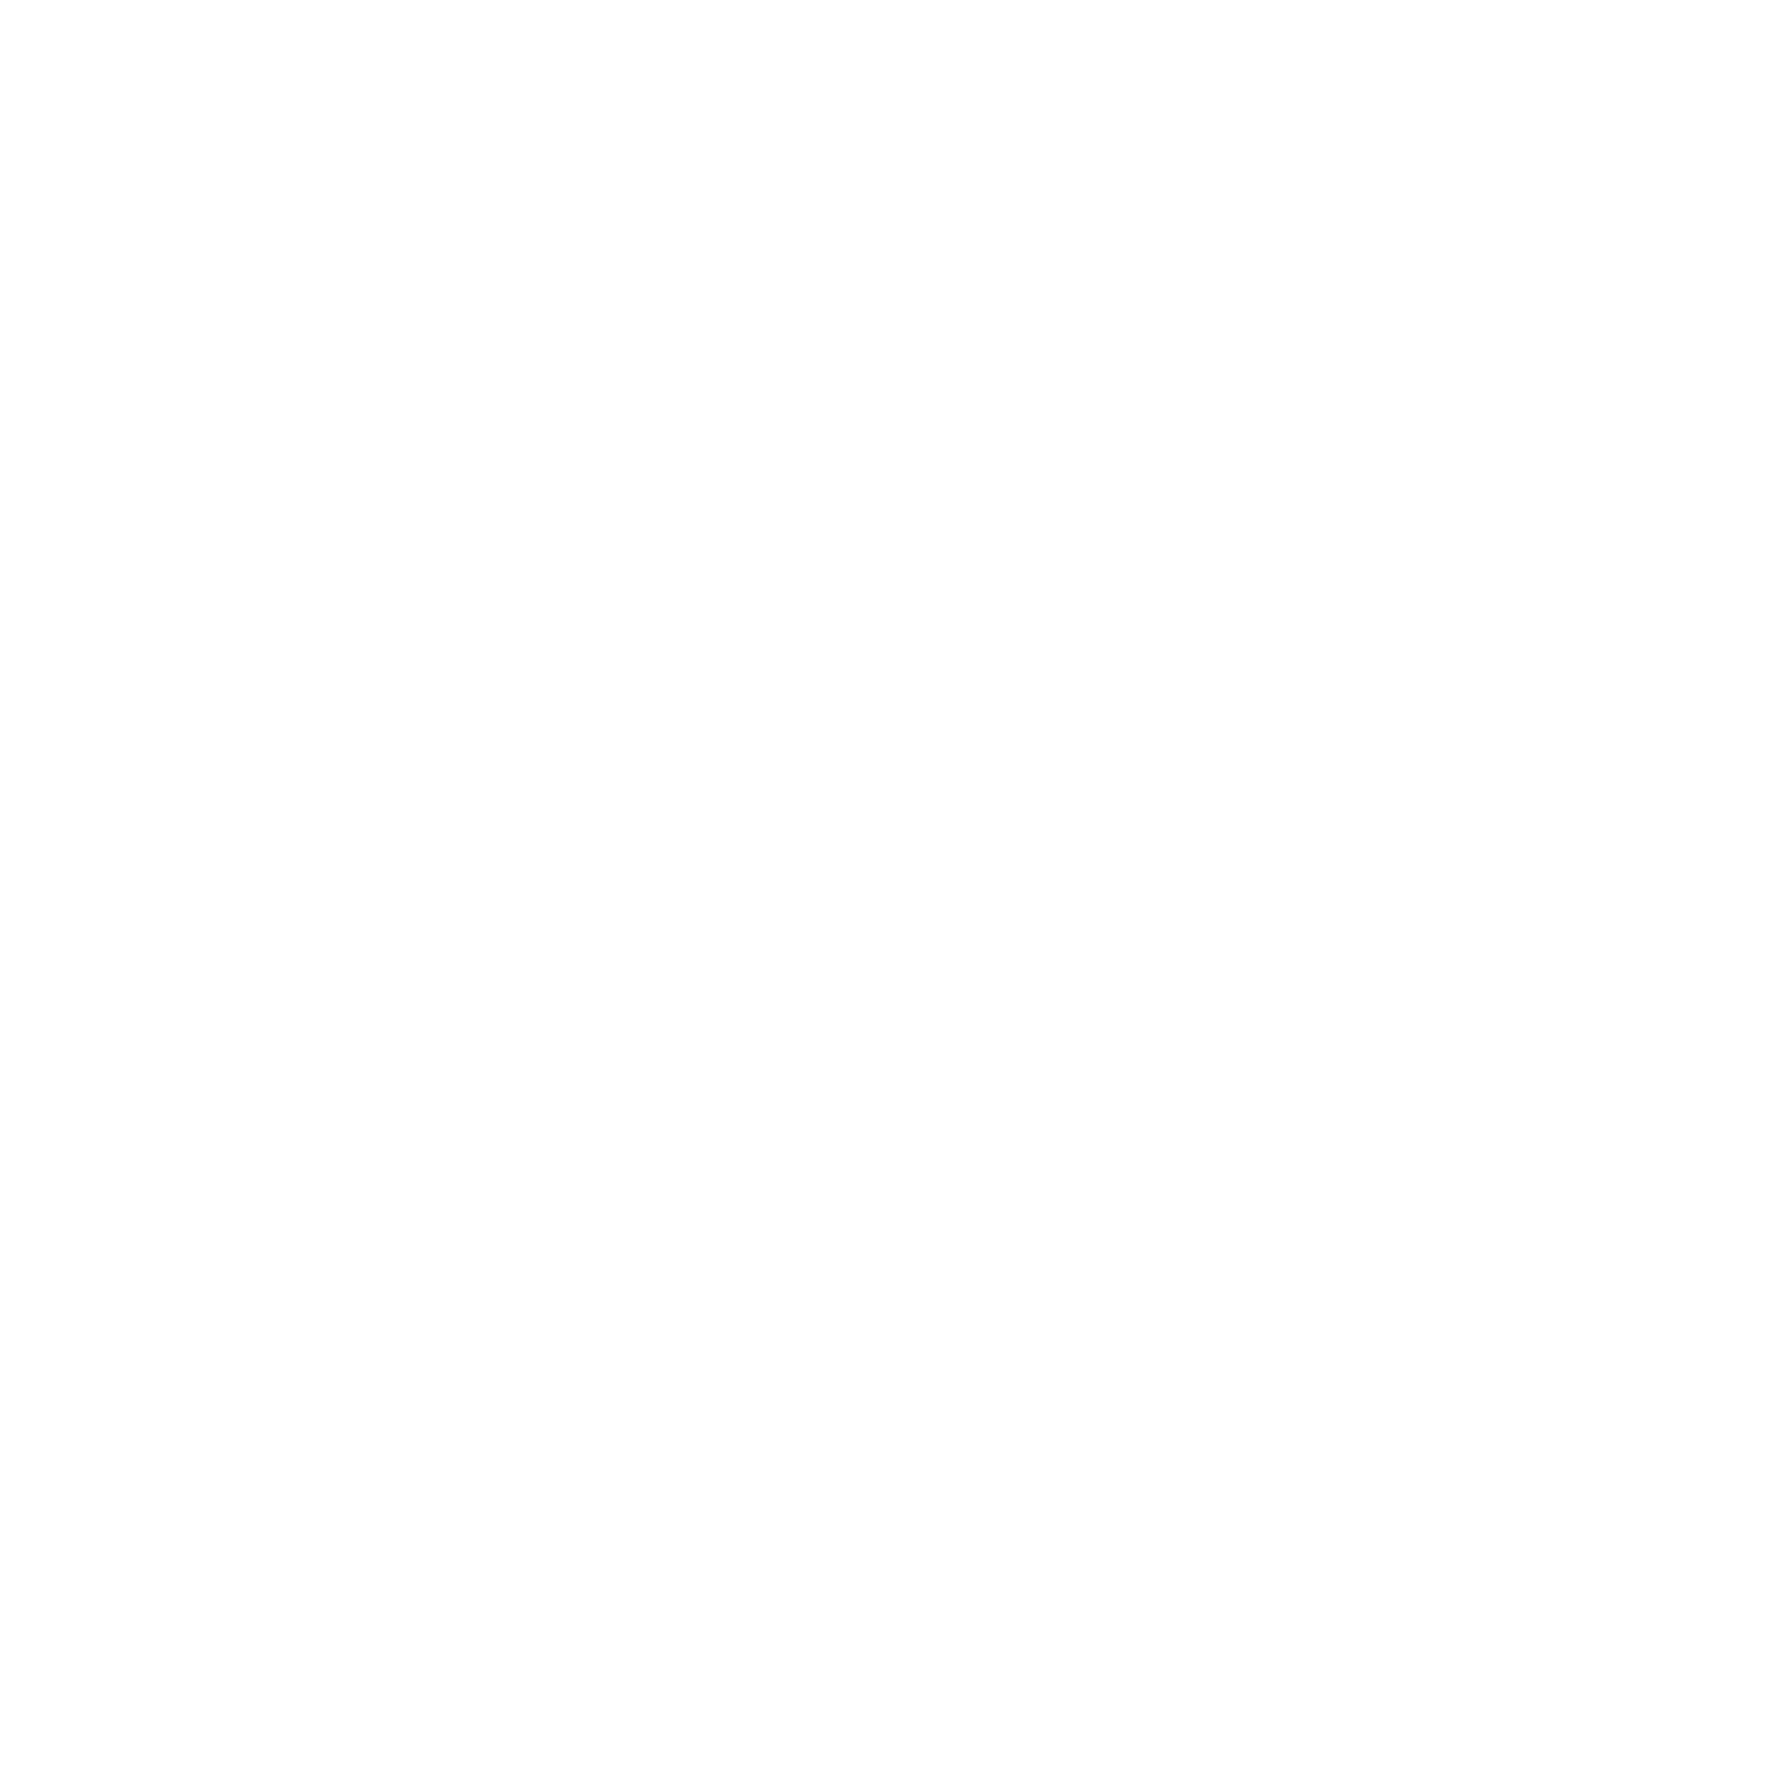 Zahn weiss